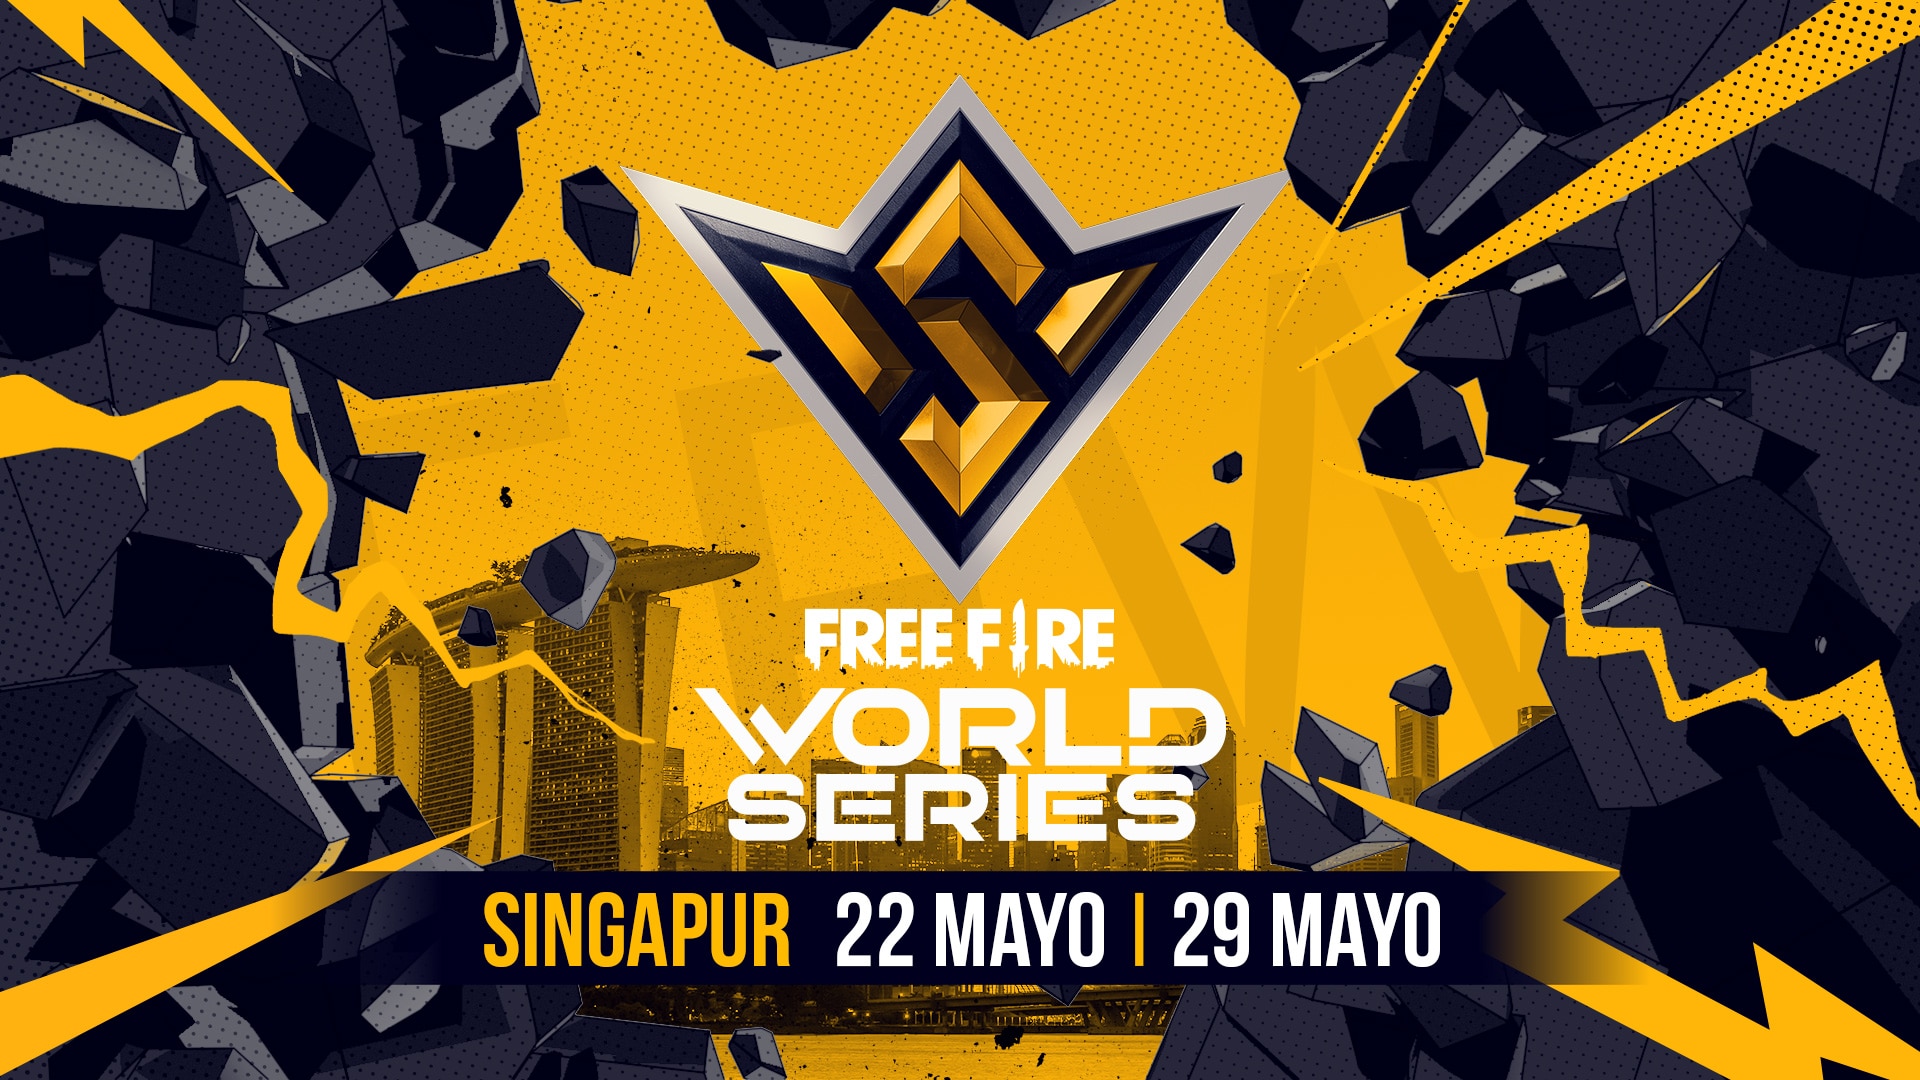 Garena anuncia la Free Fire World Series 2021 Singapur con una bolsa acumulada de US$2,000,000, GamersRD